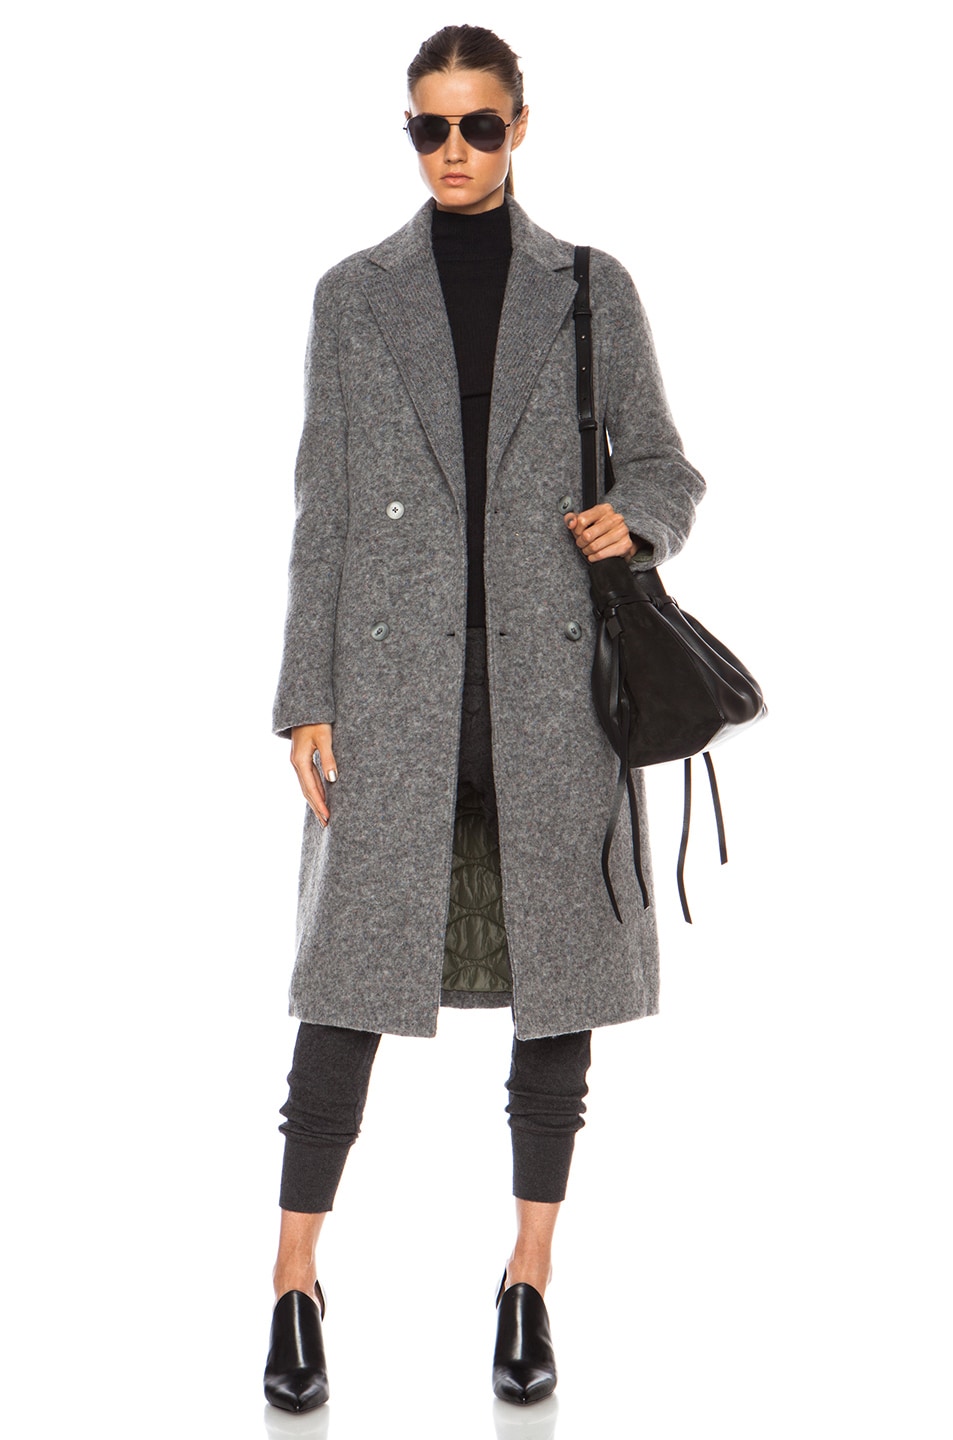 T by Alexander Wang Reversible Wool-Blend Coat in Grey & Moss | FWRD